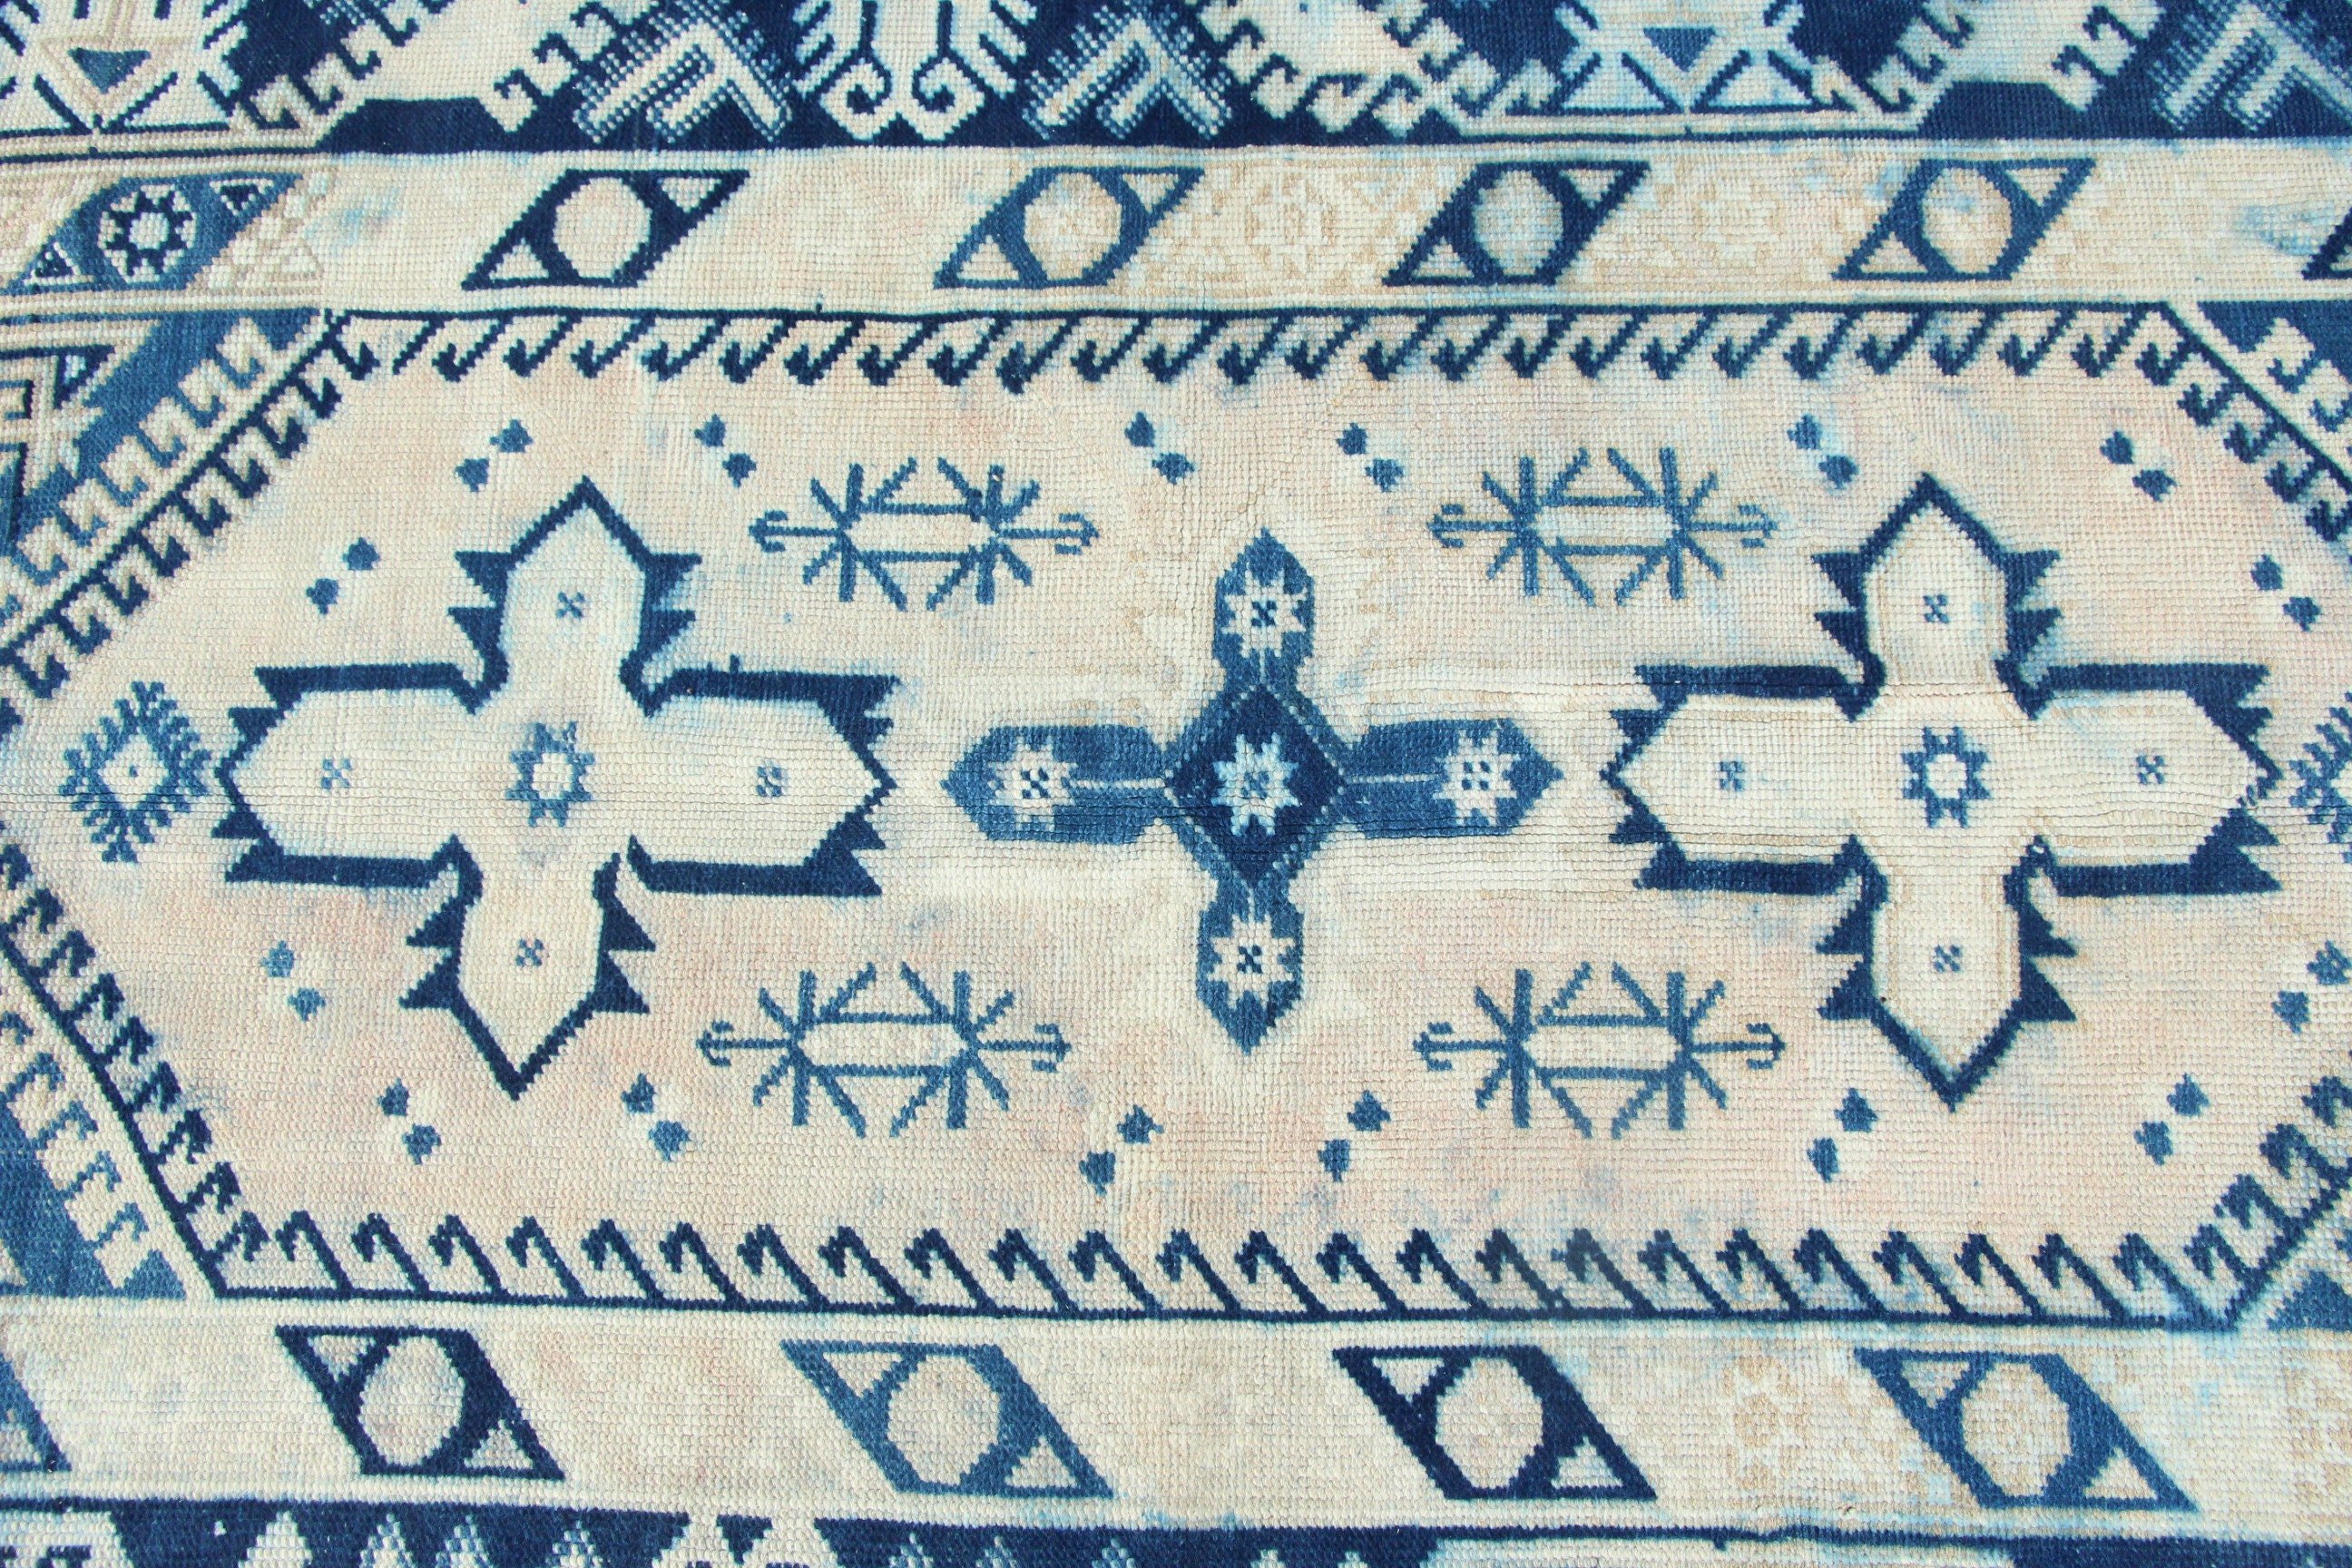 Tribal Rug, Turkish Rugs, Vintage Rug, Blue Kitchen Rug, Wool Rug, Boho Area Rug Rugs, Rugs for Nursery, Bedroom Rugs, 4.2x6.8 ft Area Rug